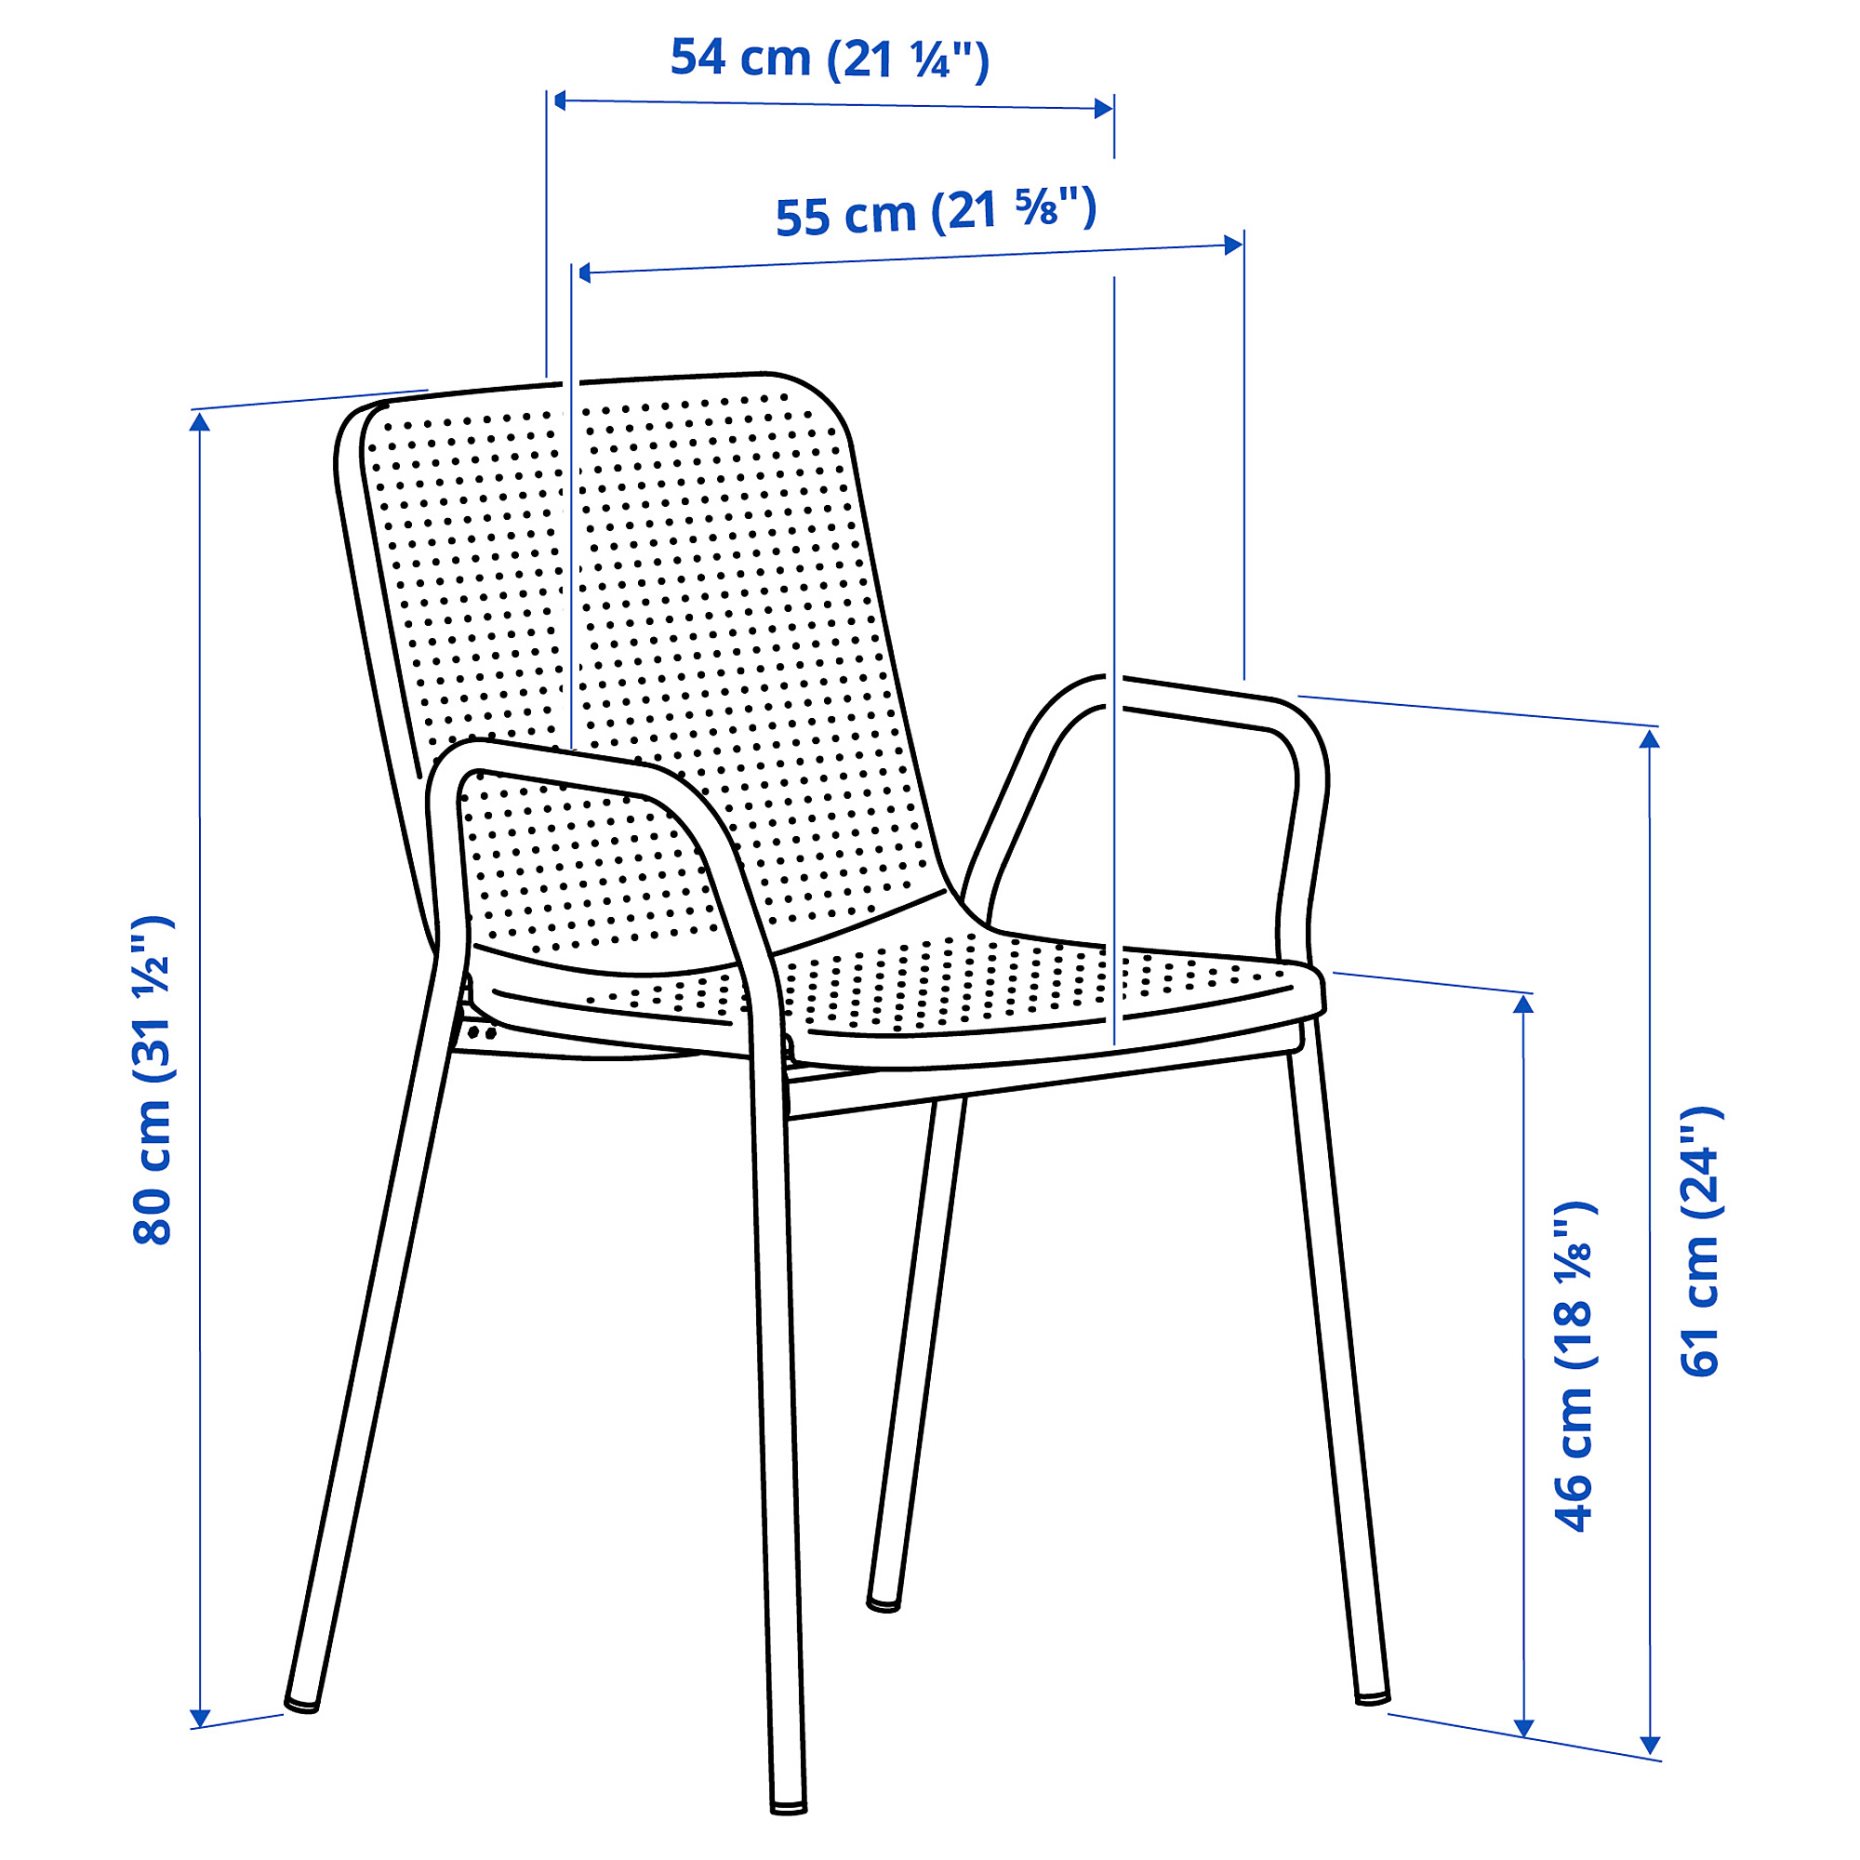 TORPARÖ, καρέκλα με μπράτσα, εσωτερικού/εξωτερικού χώρου, 305.185.29